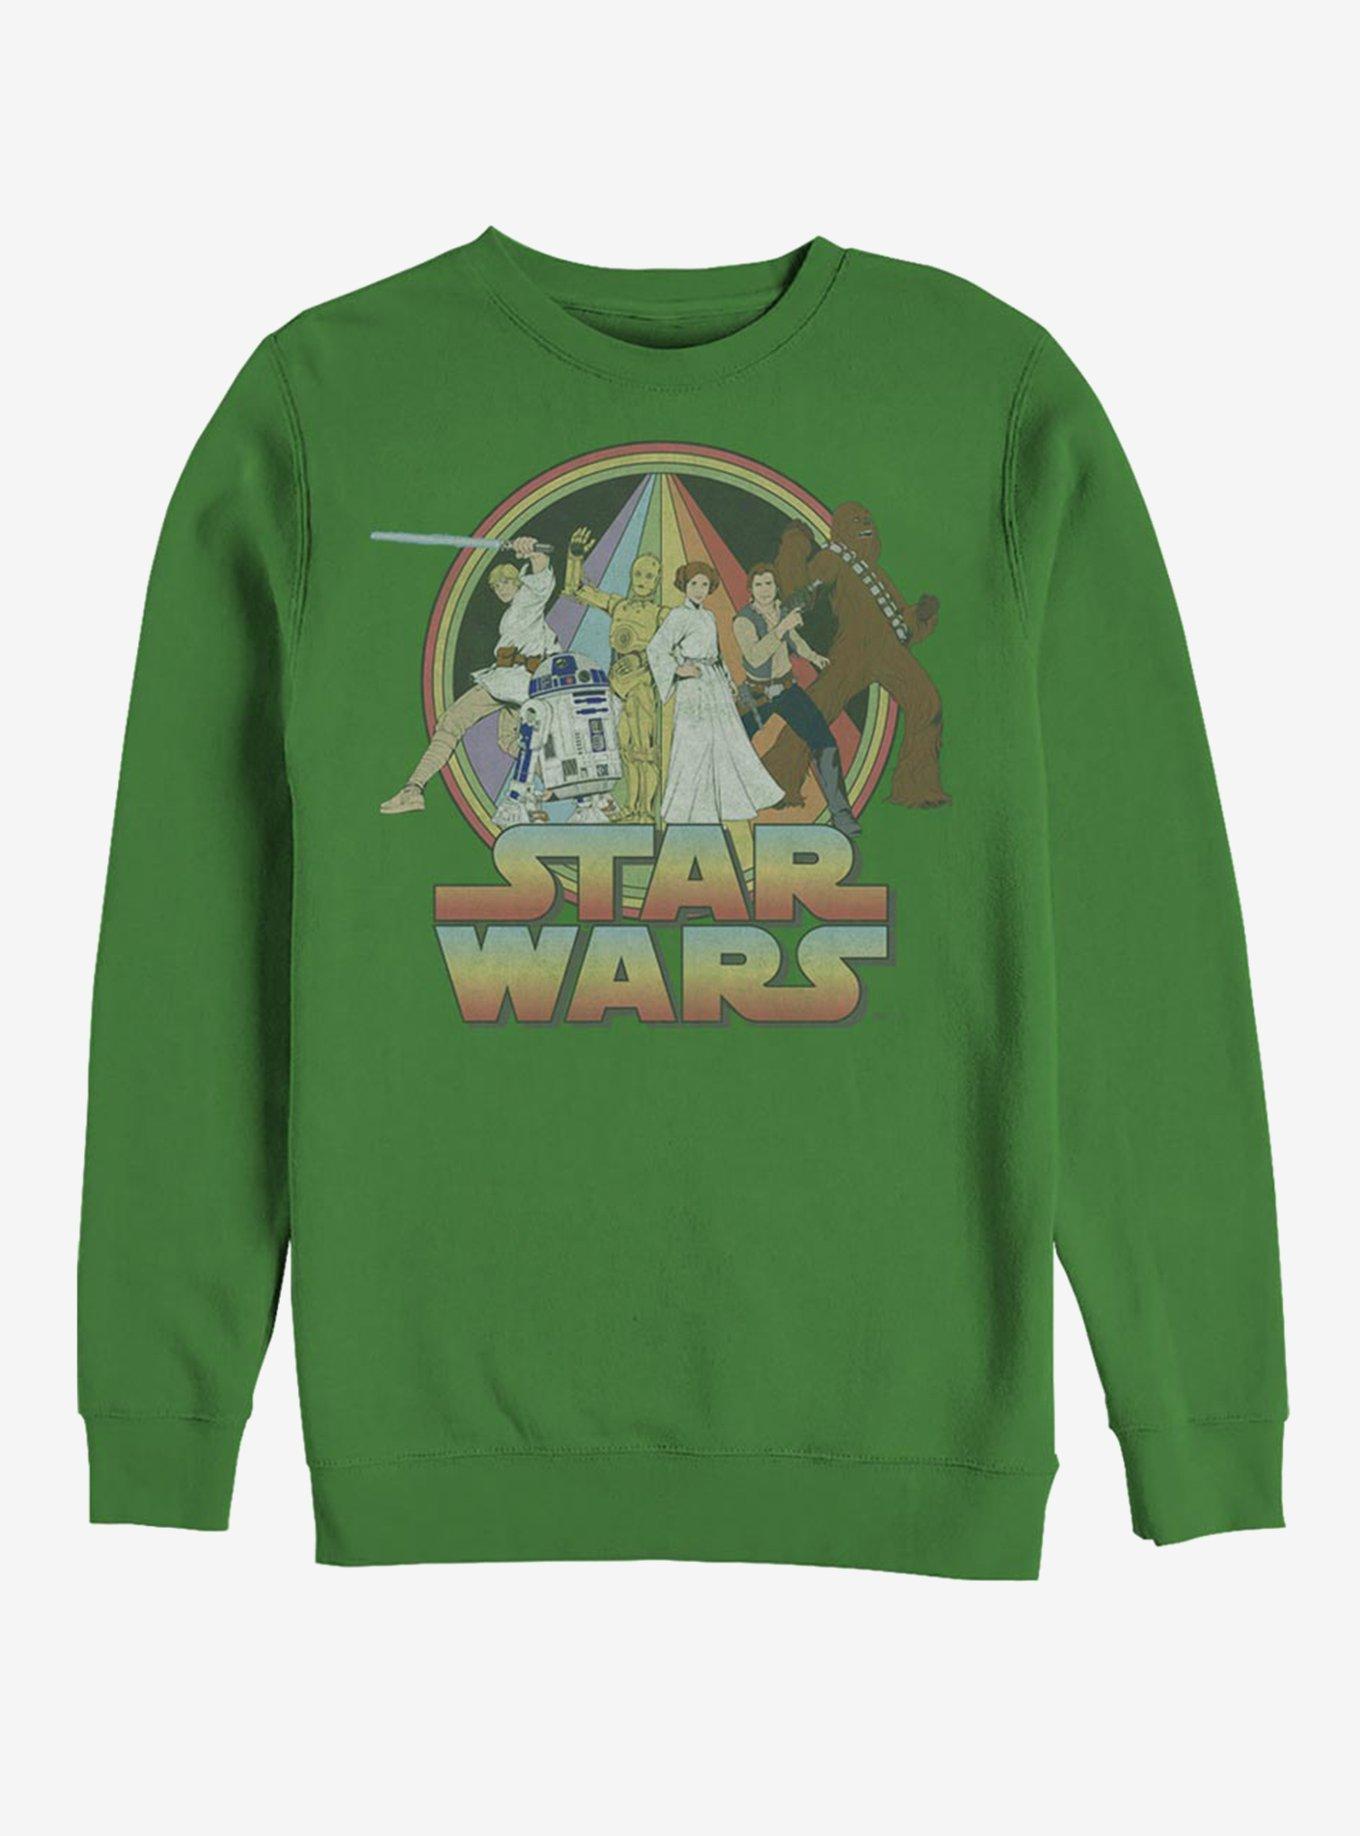 Star Wars Psychedelic Sweatshirt